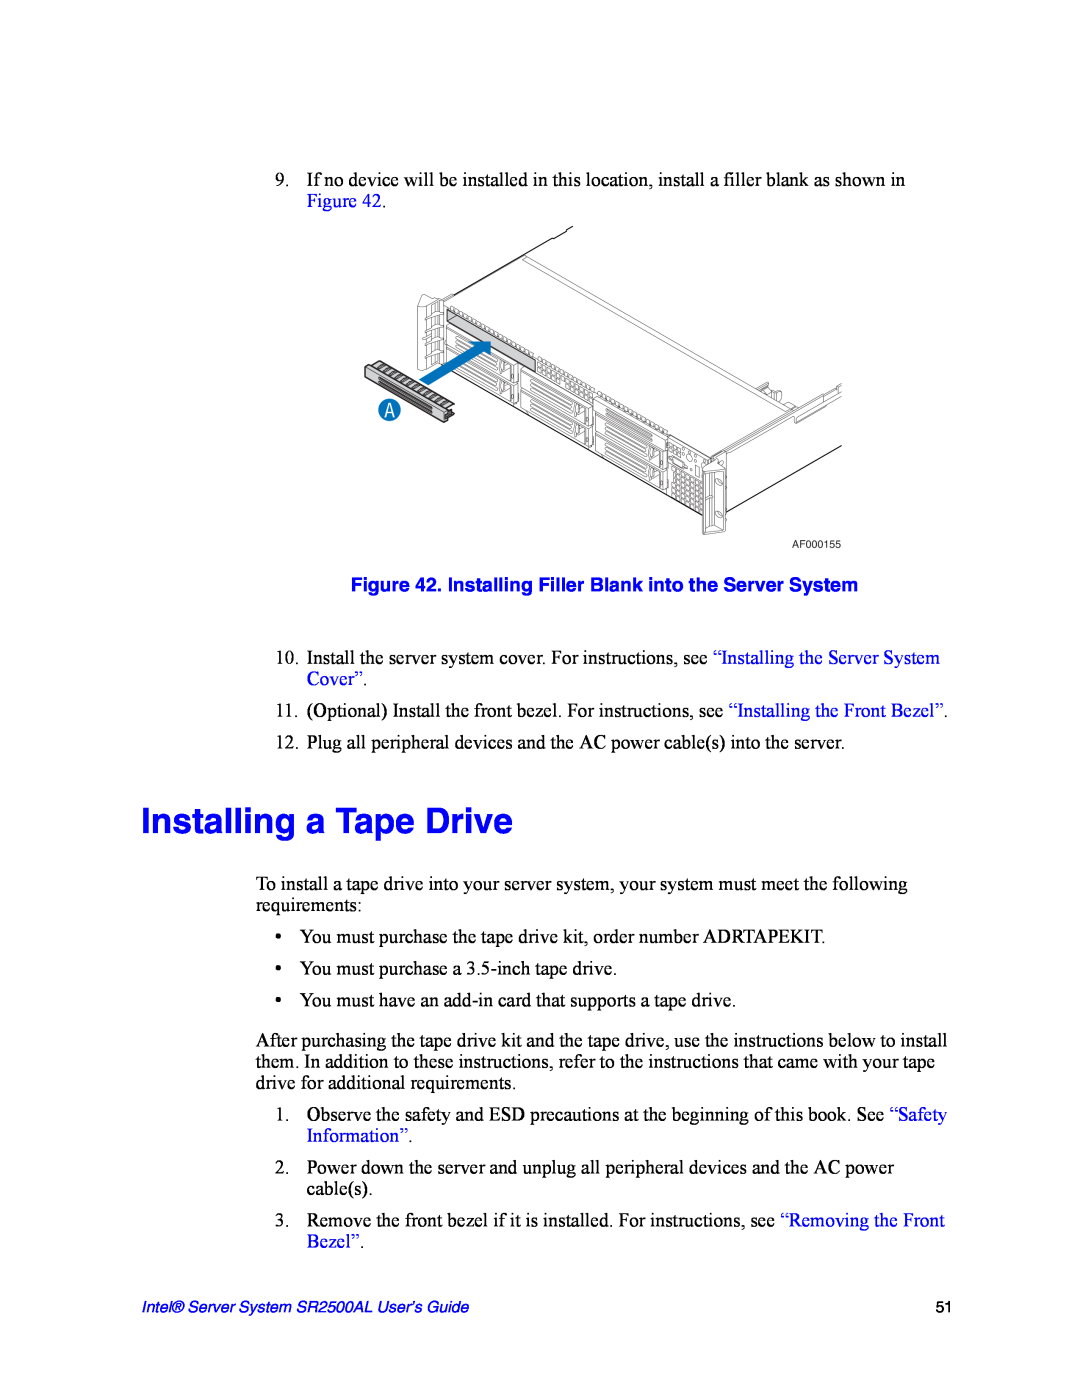 Intel SR2500AL manual Installing a Tape Drive, Installing Filler Blank into the Server System 